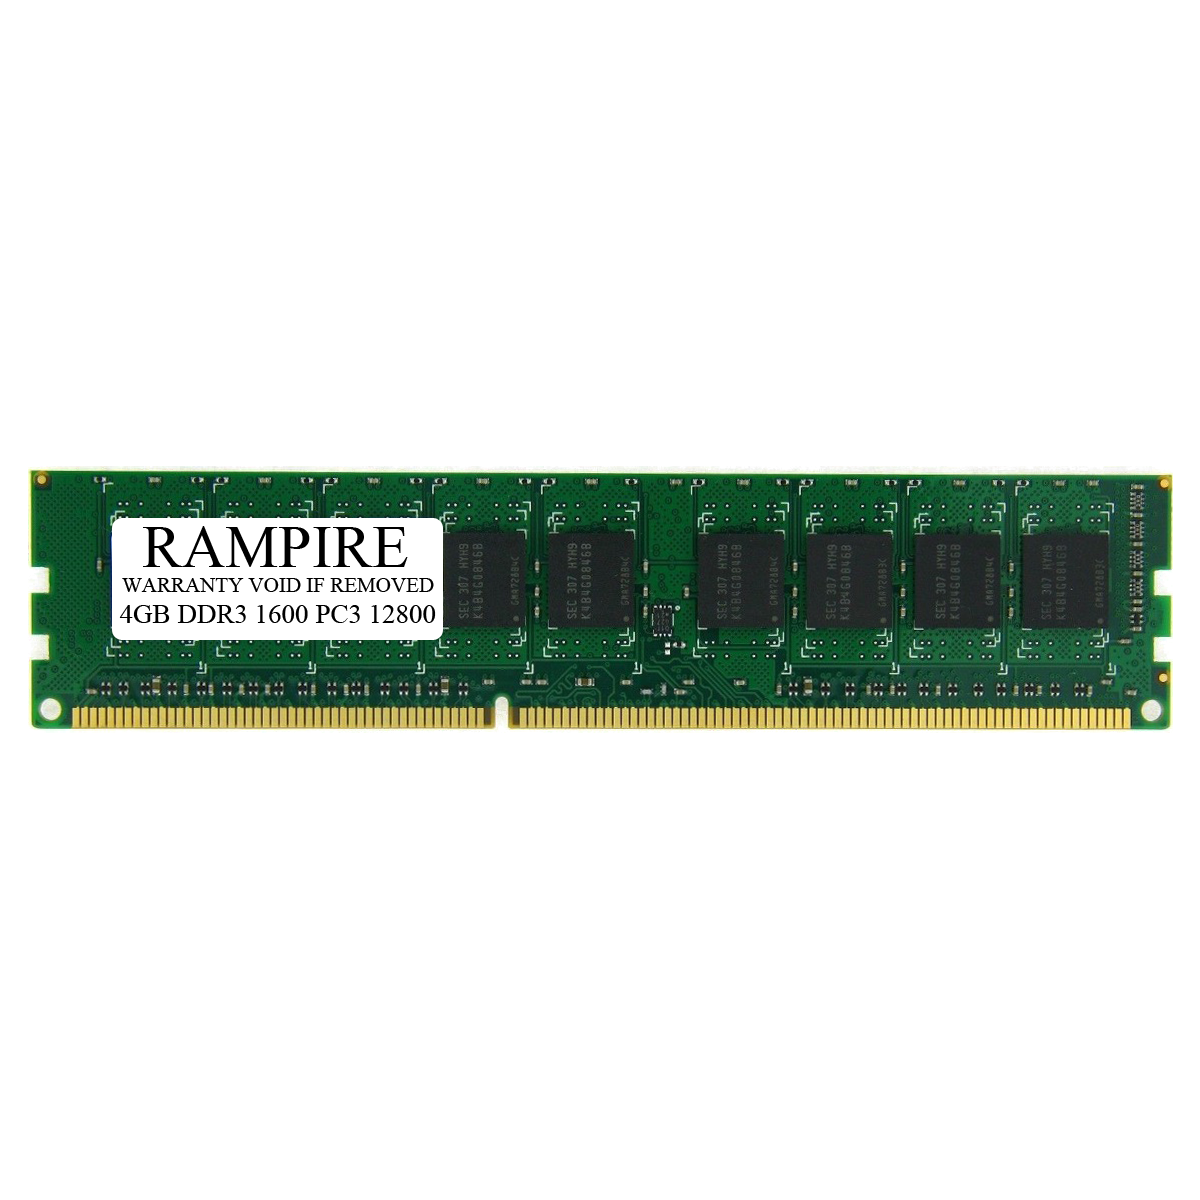 RAMPIRE 4GB DDR3 1600 (PC3 12800) 240-Pin SDRAM 2Rx8 Standard Profile 1.5V ECC Unregistered Server Memory